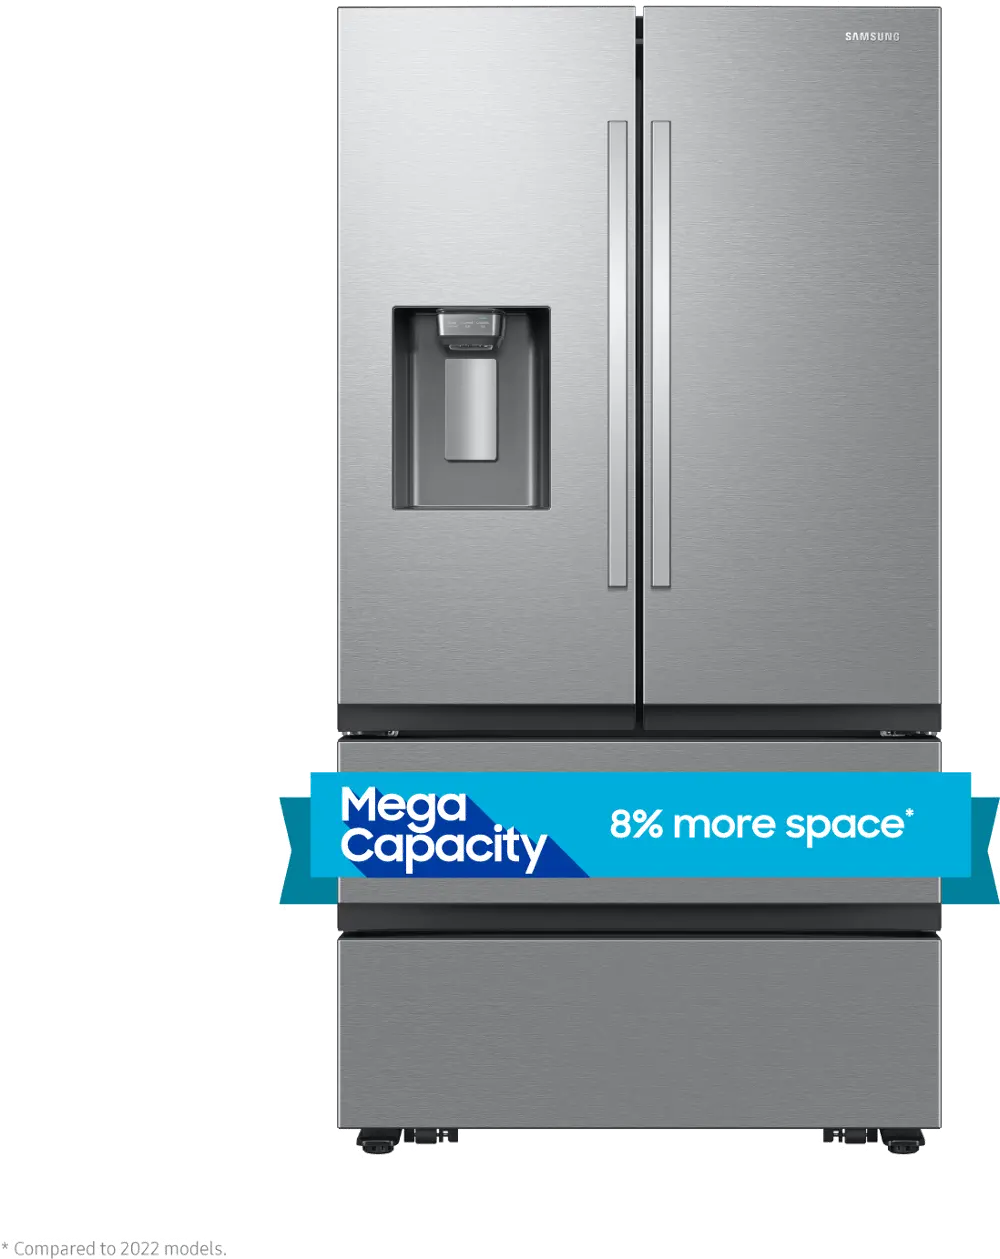 RF26CG7400SR Samsung 25 cu ft Mega Capacity French Door Refrigerator - Counter Depth Stainless Steel-1